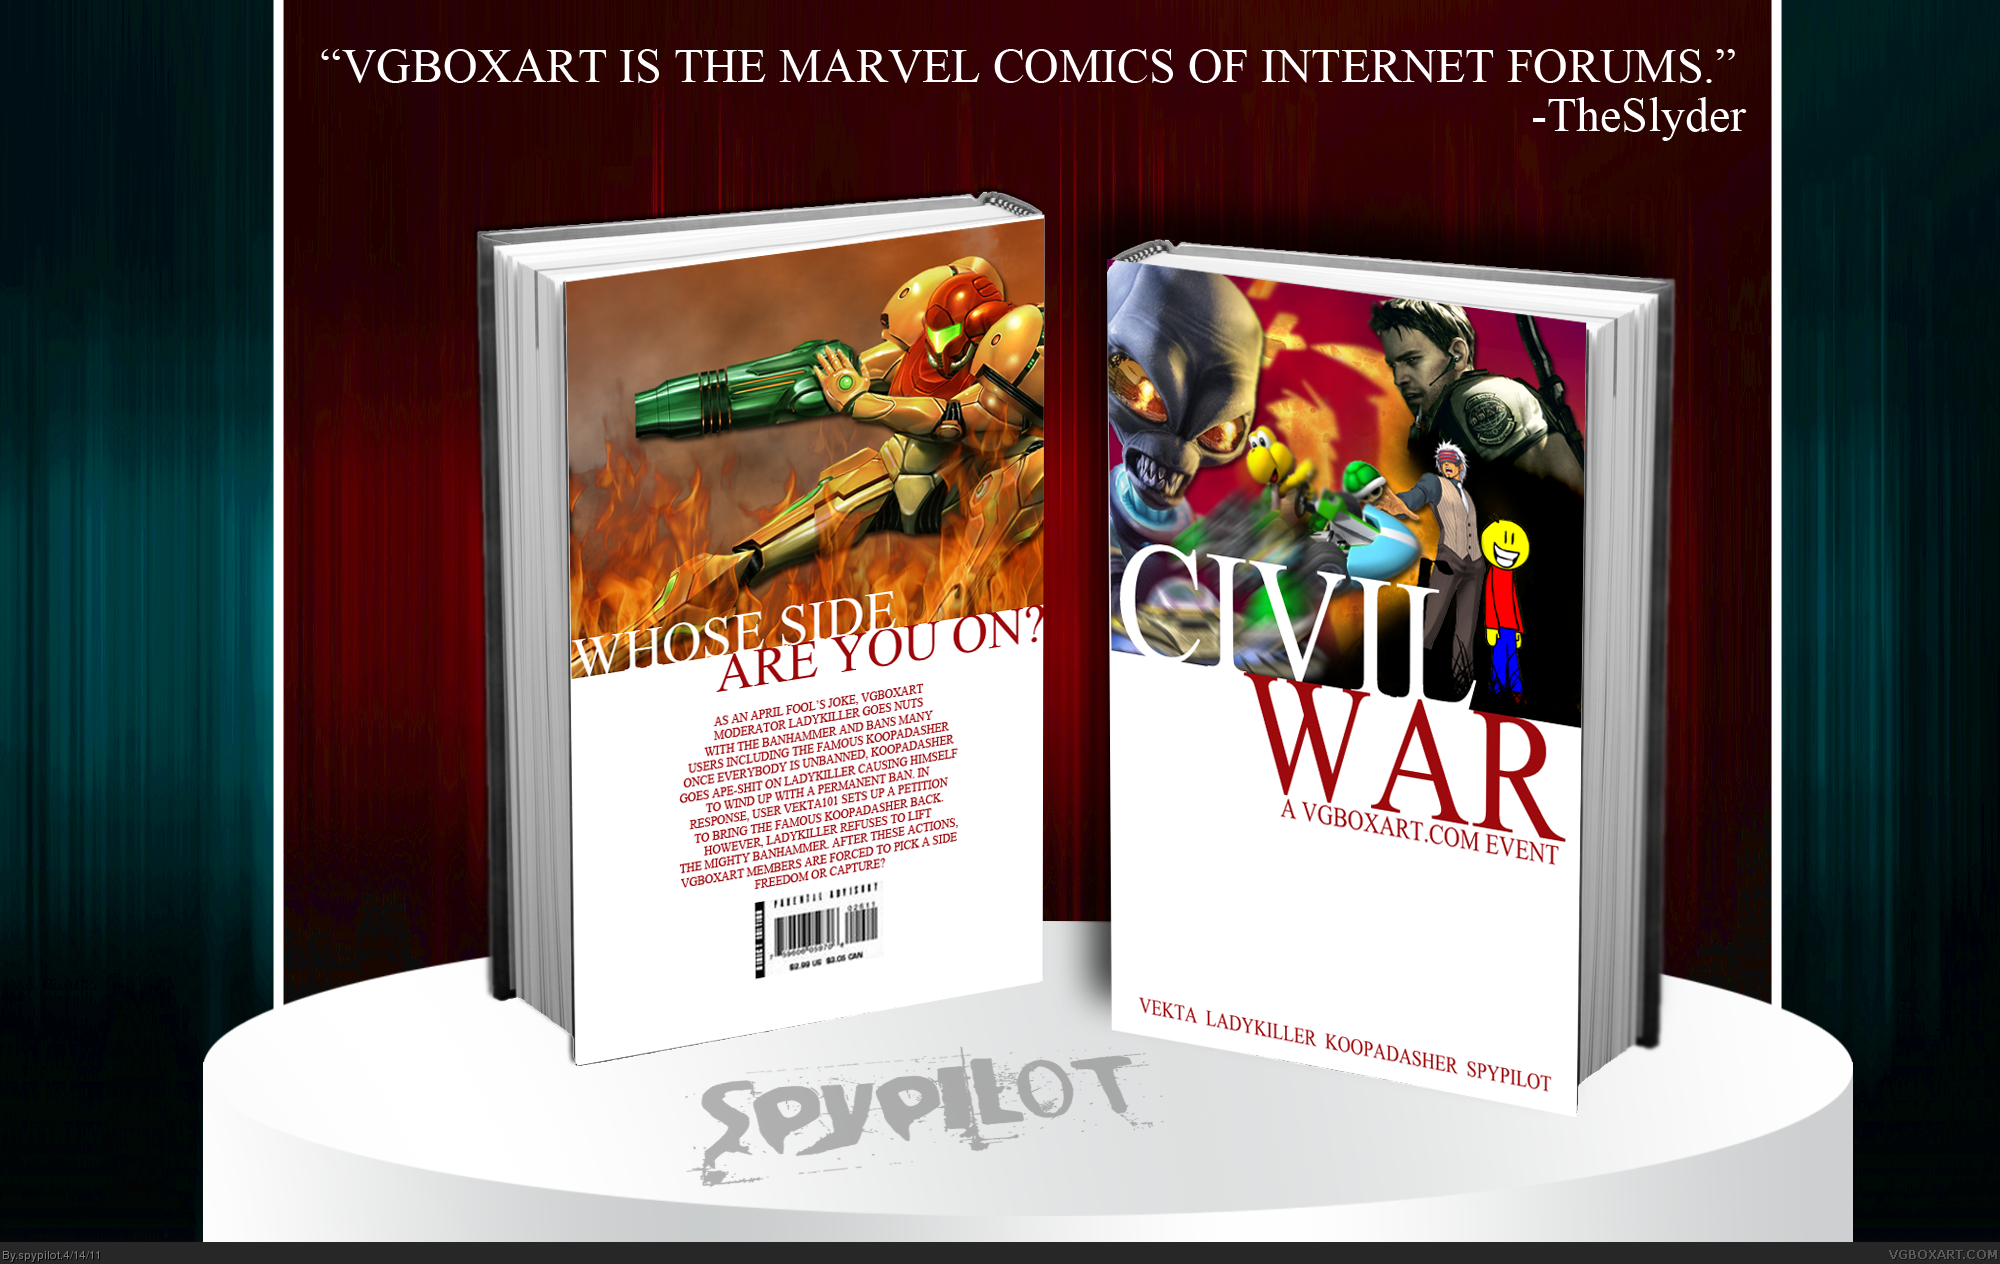 CIVIL WAR: A Vgboxart.com Event box cover